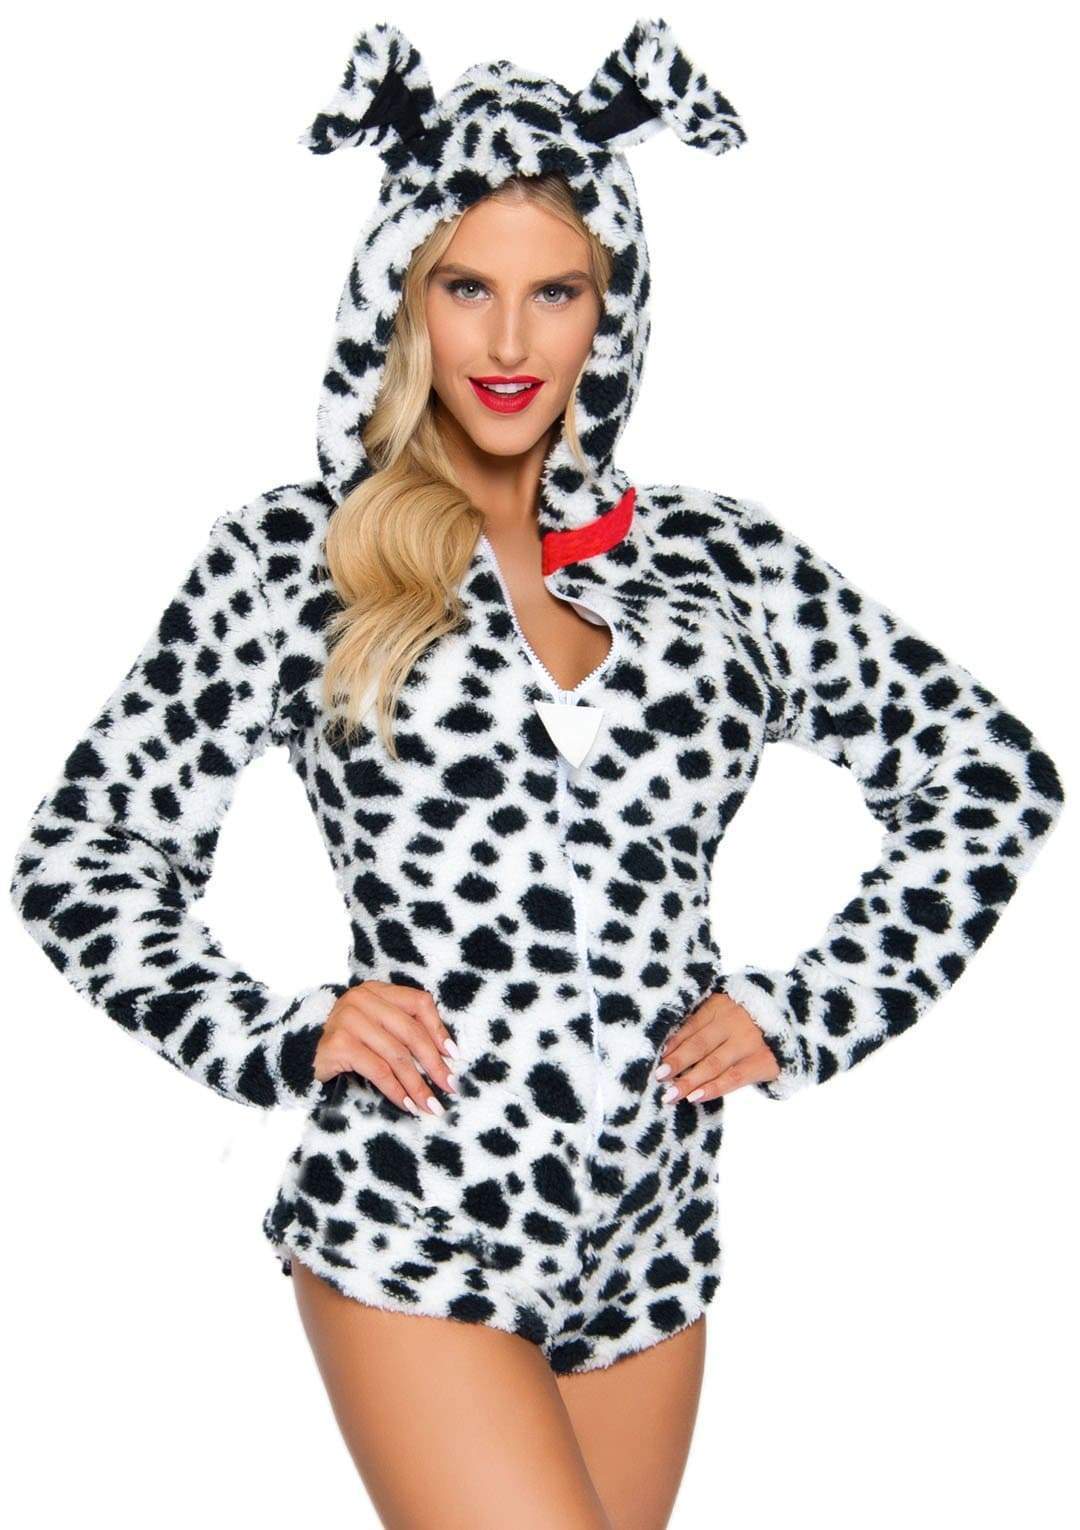 Dalmatian Costume Near Me